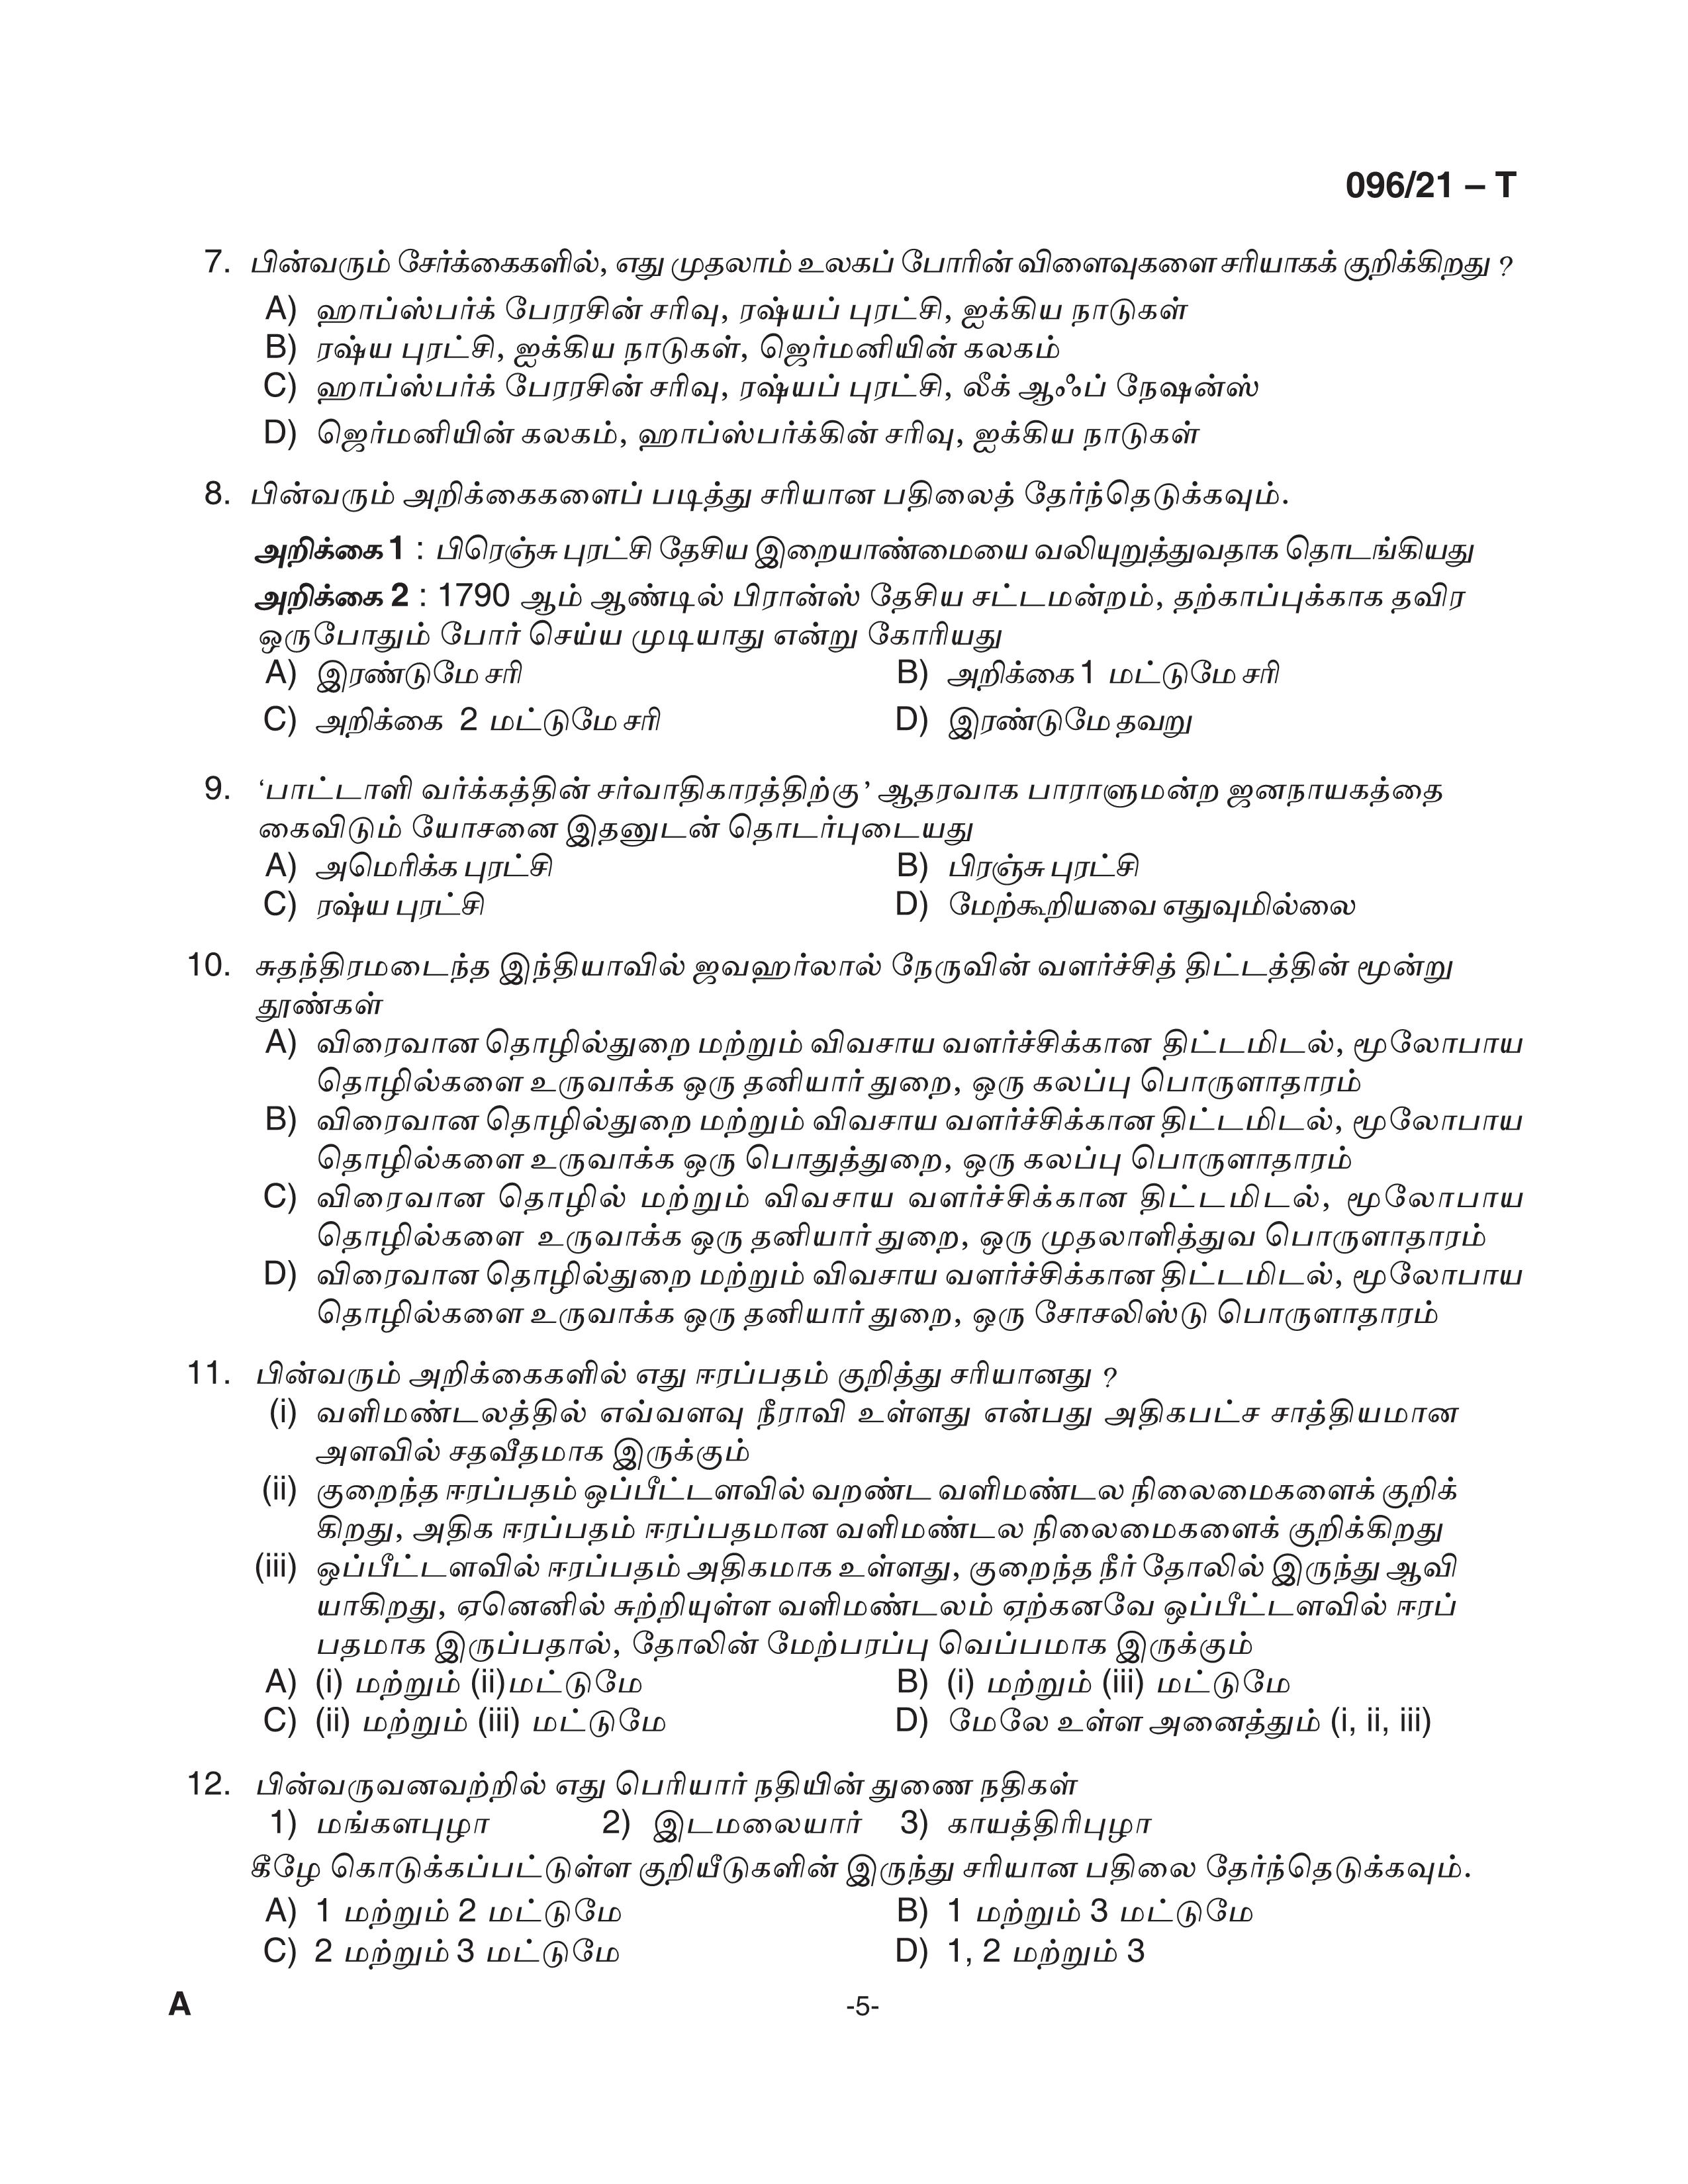 KPSC Degree Level Preliminary Exam Stage II Tamil Exam 2021 Code 09621 T 5